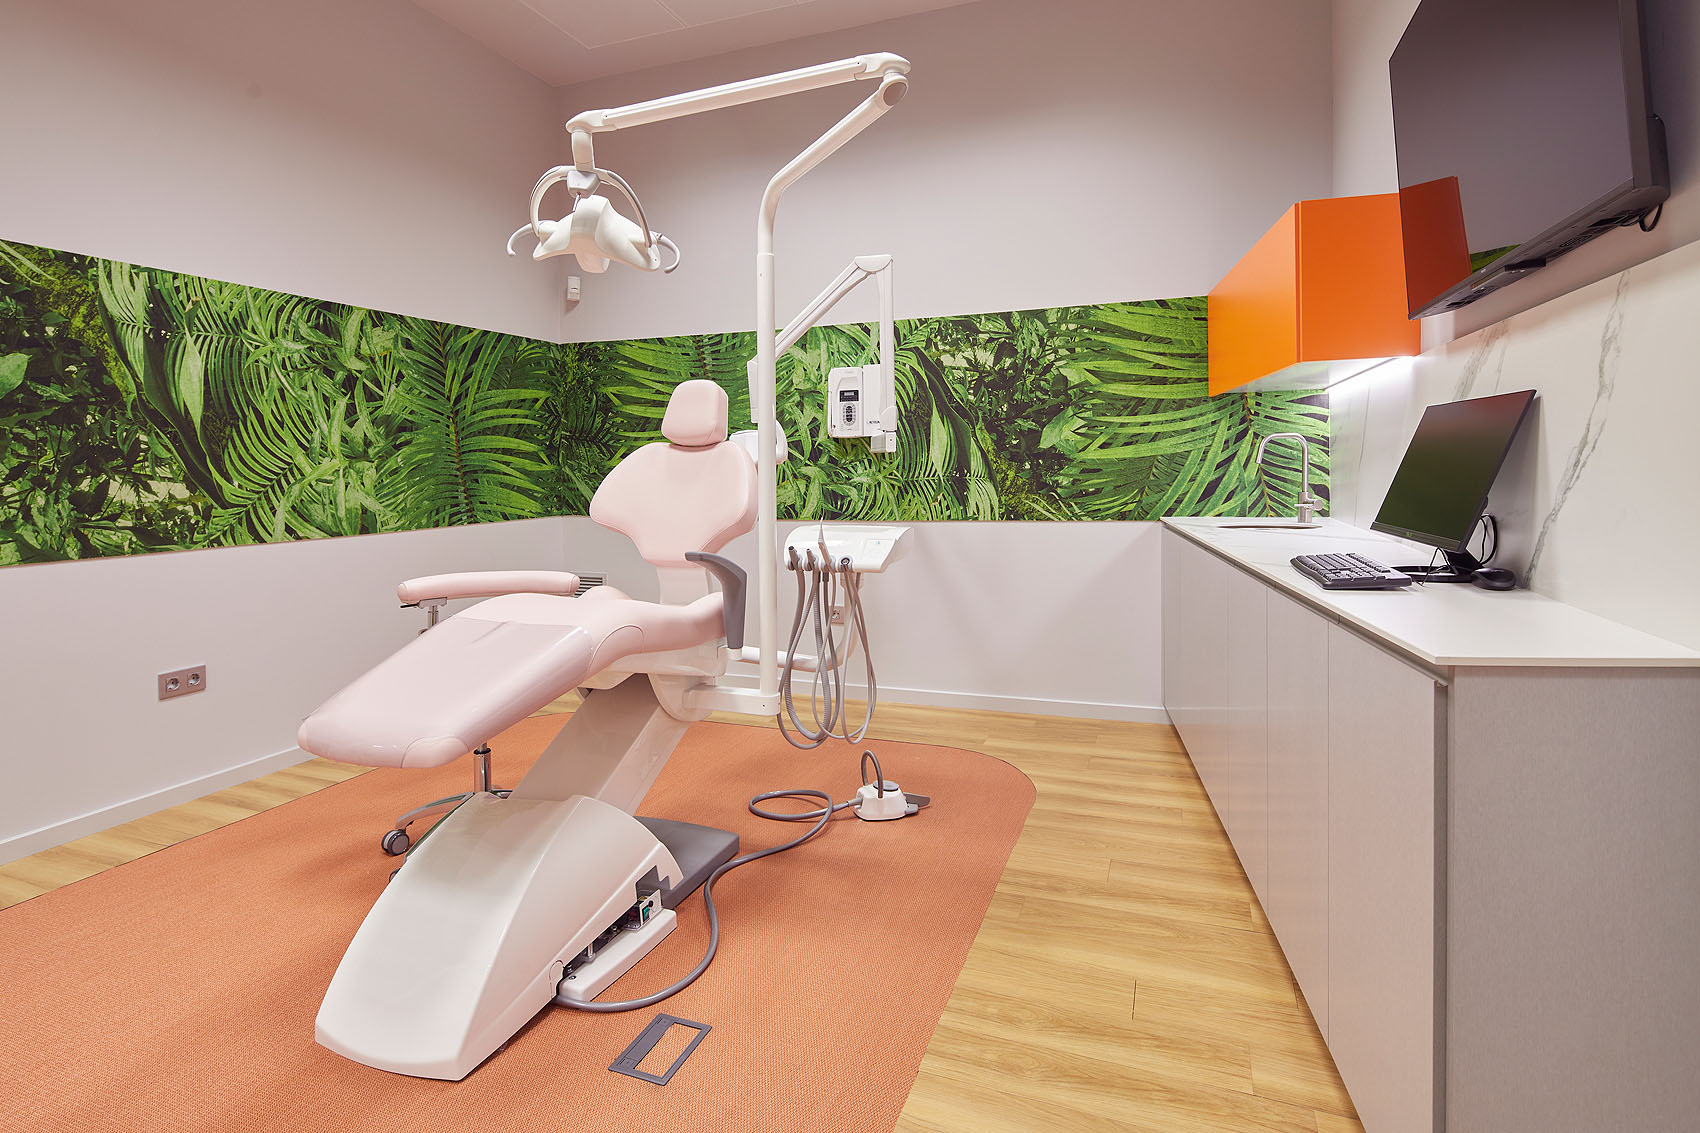 Clinica Dental Maxal en Bilbao - Iñaki Caperochipi - Fotografía